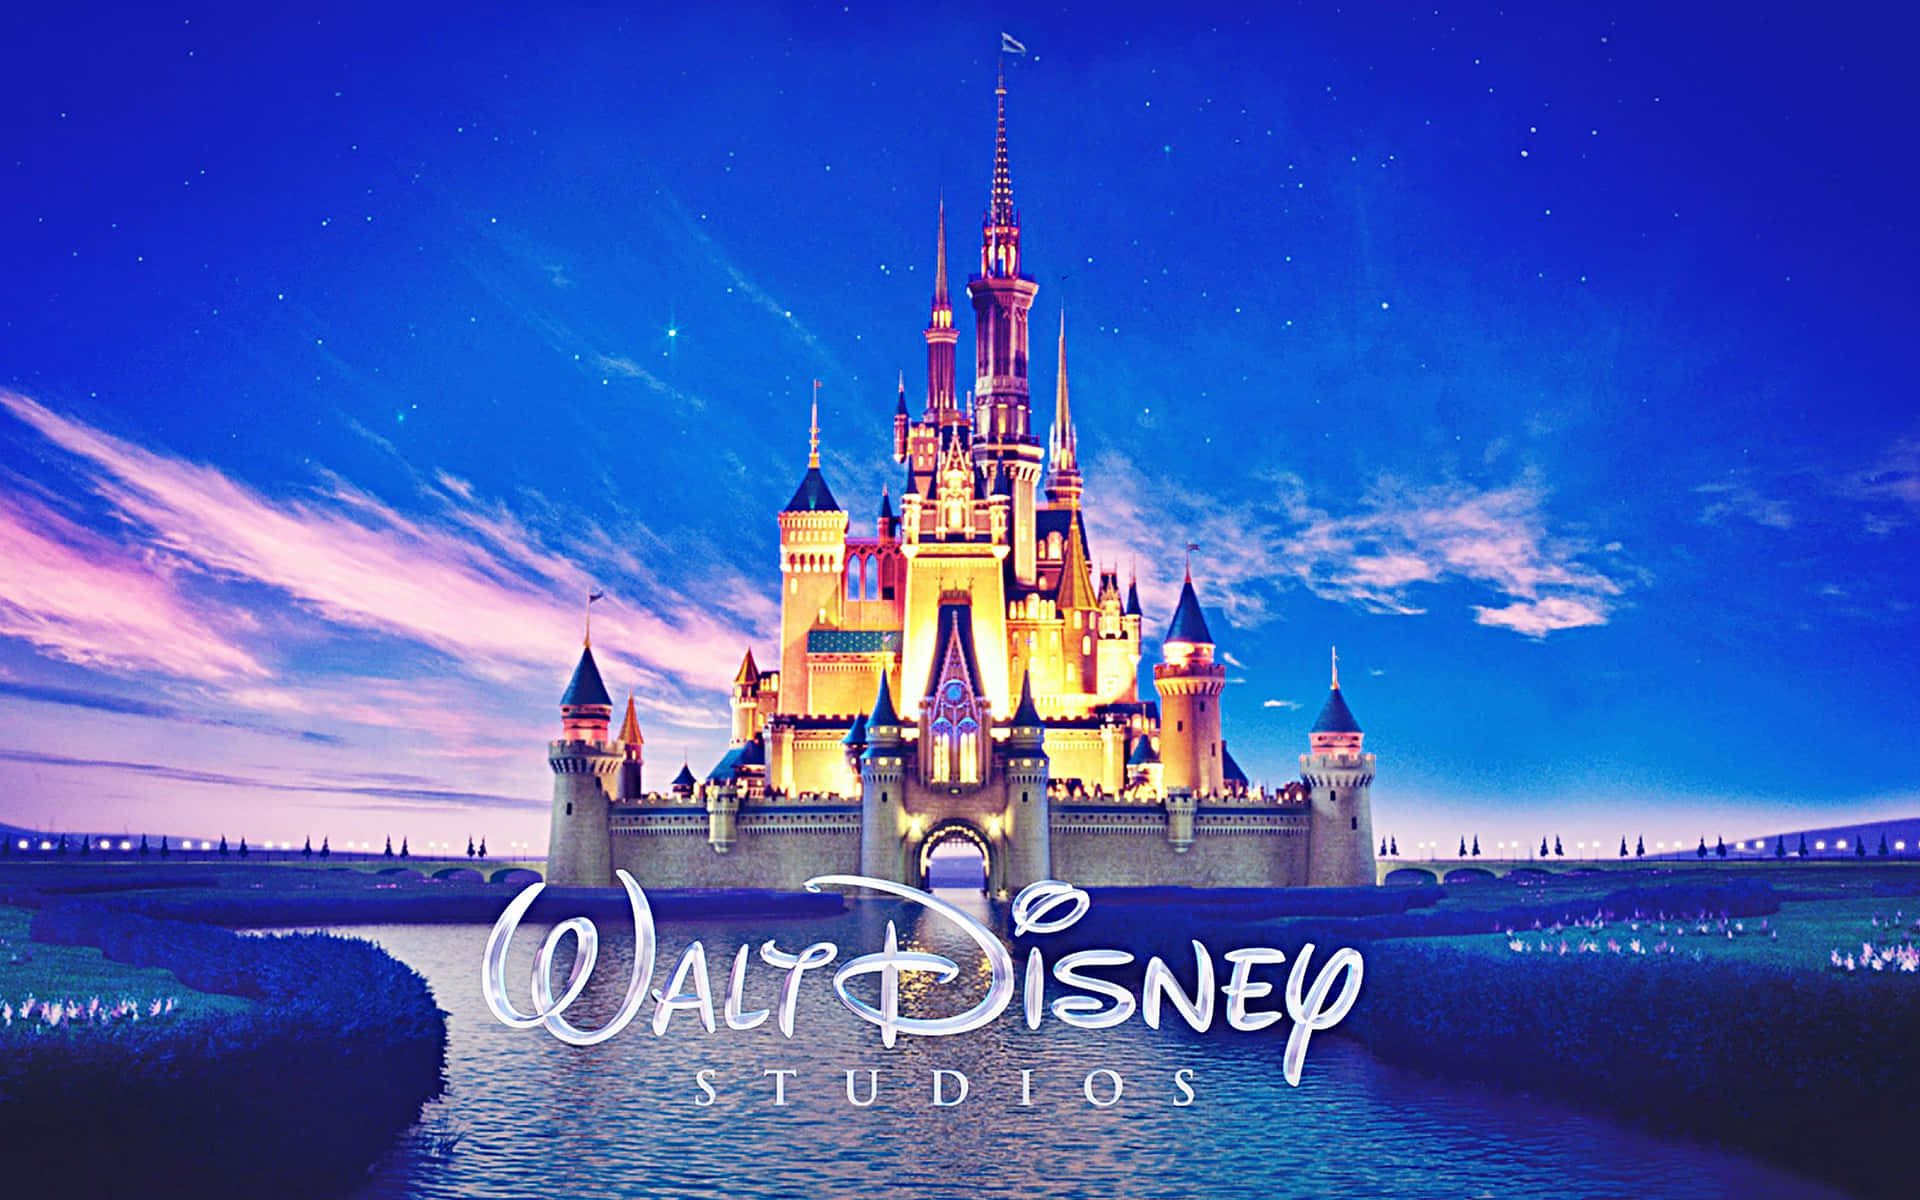 Magical Disney Castle Illuminated at Night in 4K Wallpaper